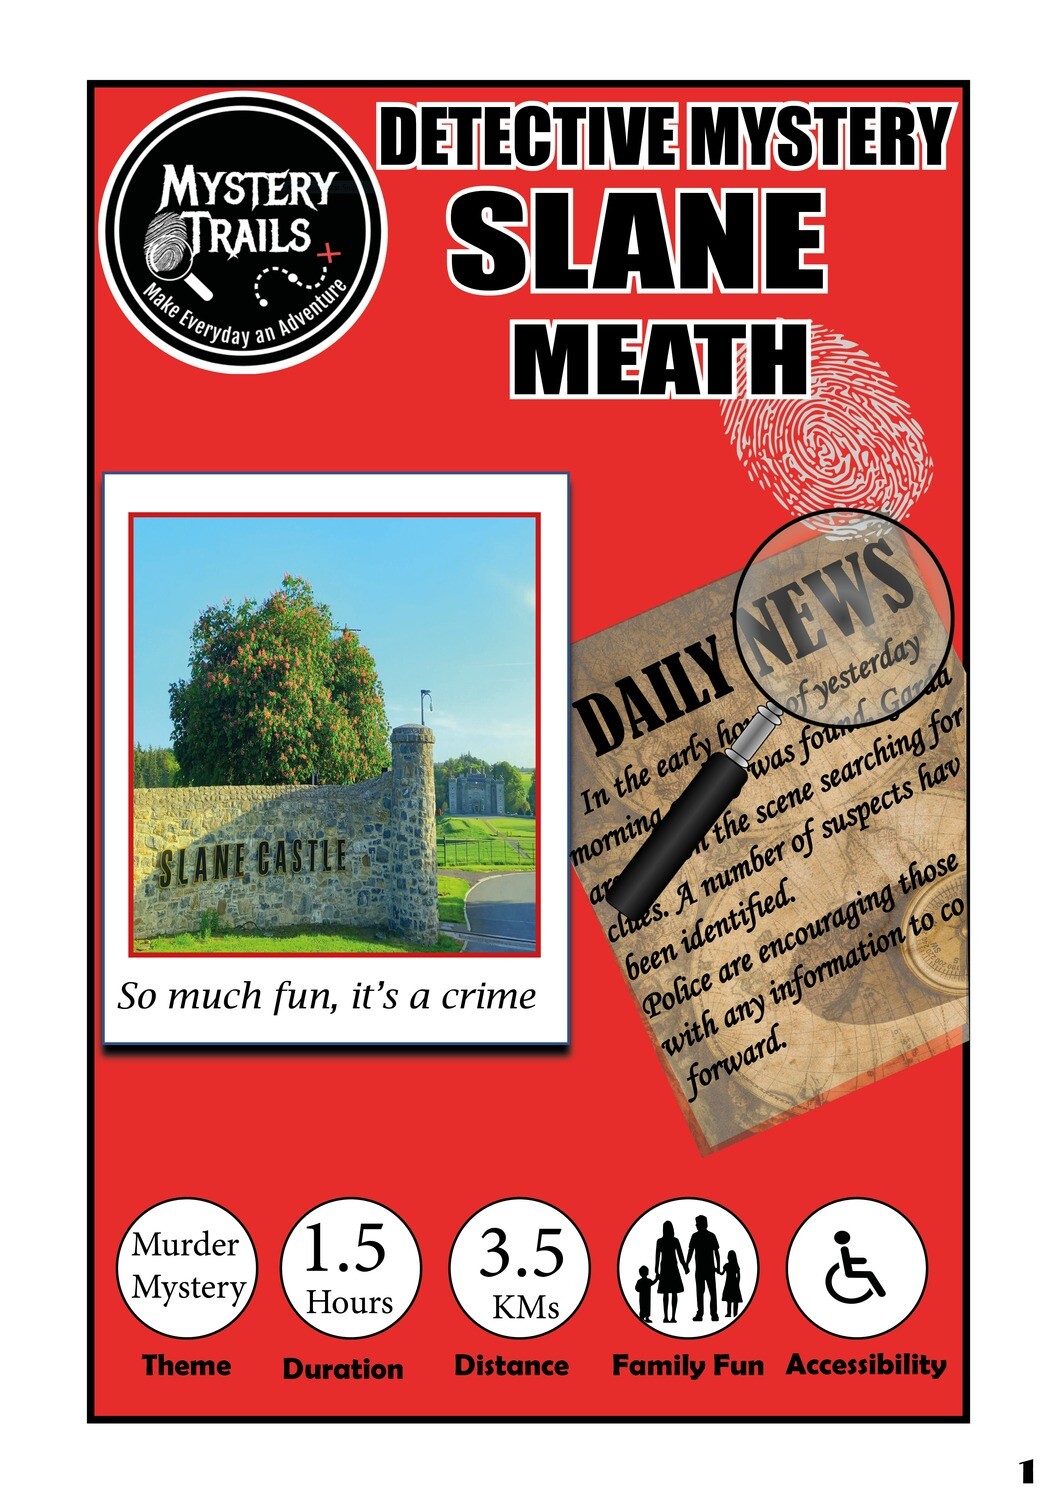 SLANE- Detective Mystery- Meath